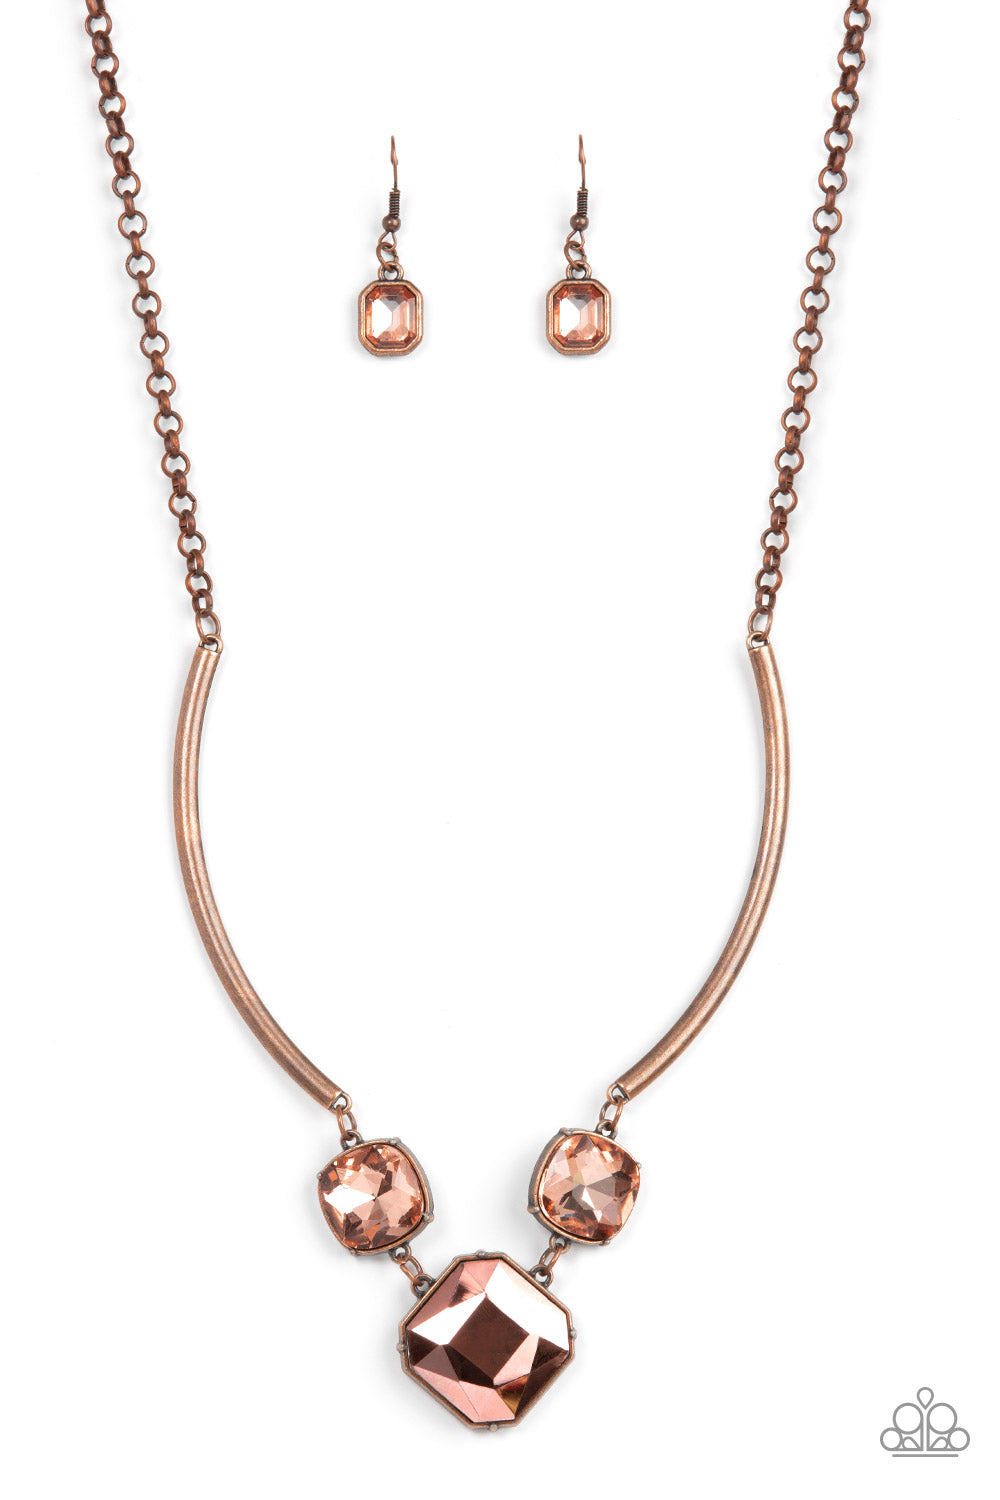 Divine IRIDESCENCE - copper - Paparazzi necklace